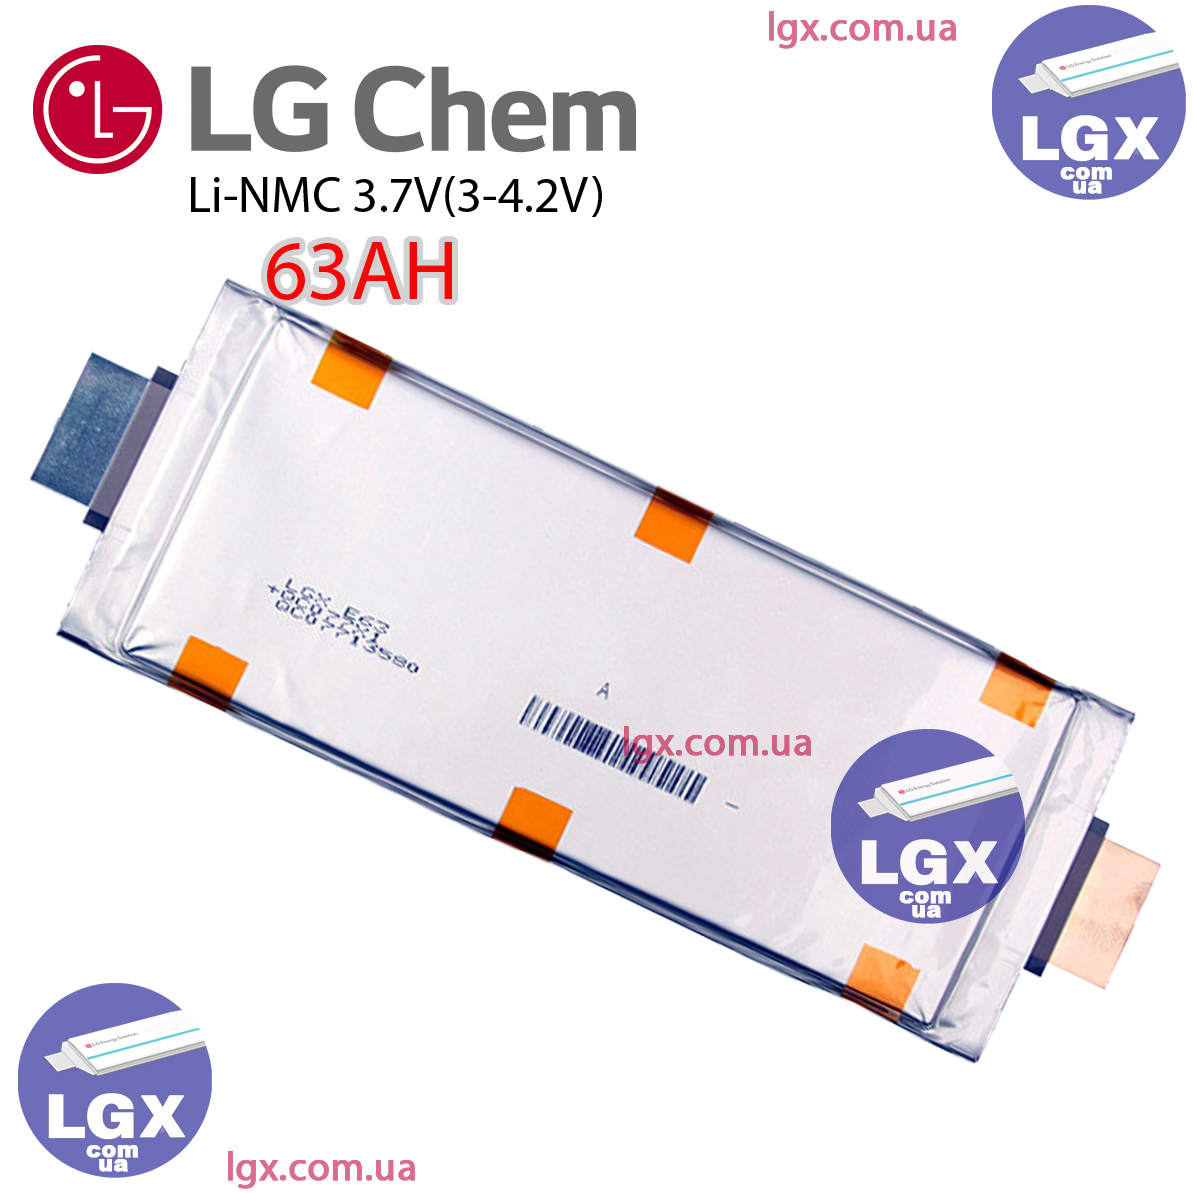 Аккумуляторный елемент LG-Chem LGX-e63 химия NMC 3.6v (пакет) емкость 63А/Ч разряд 3-5c 2000 циклов 929грам